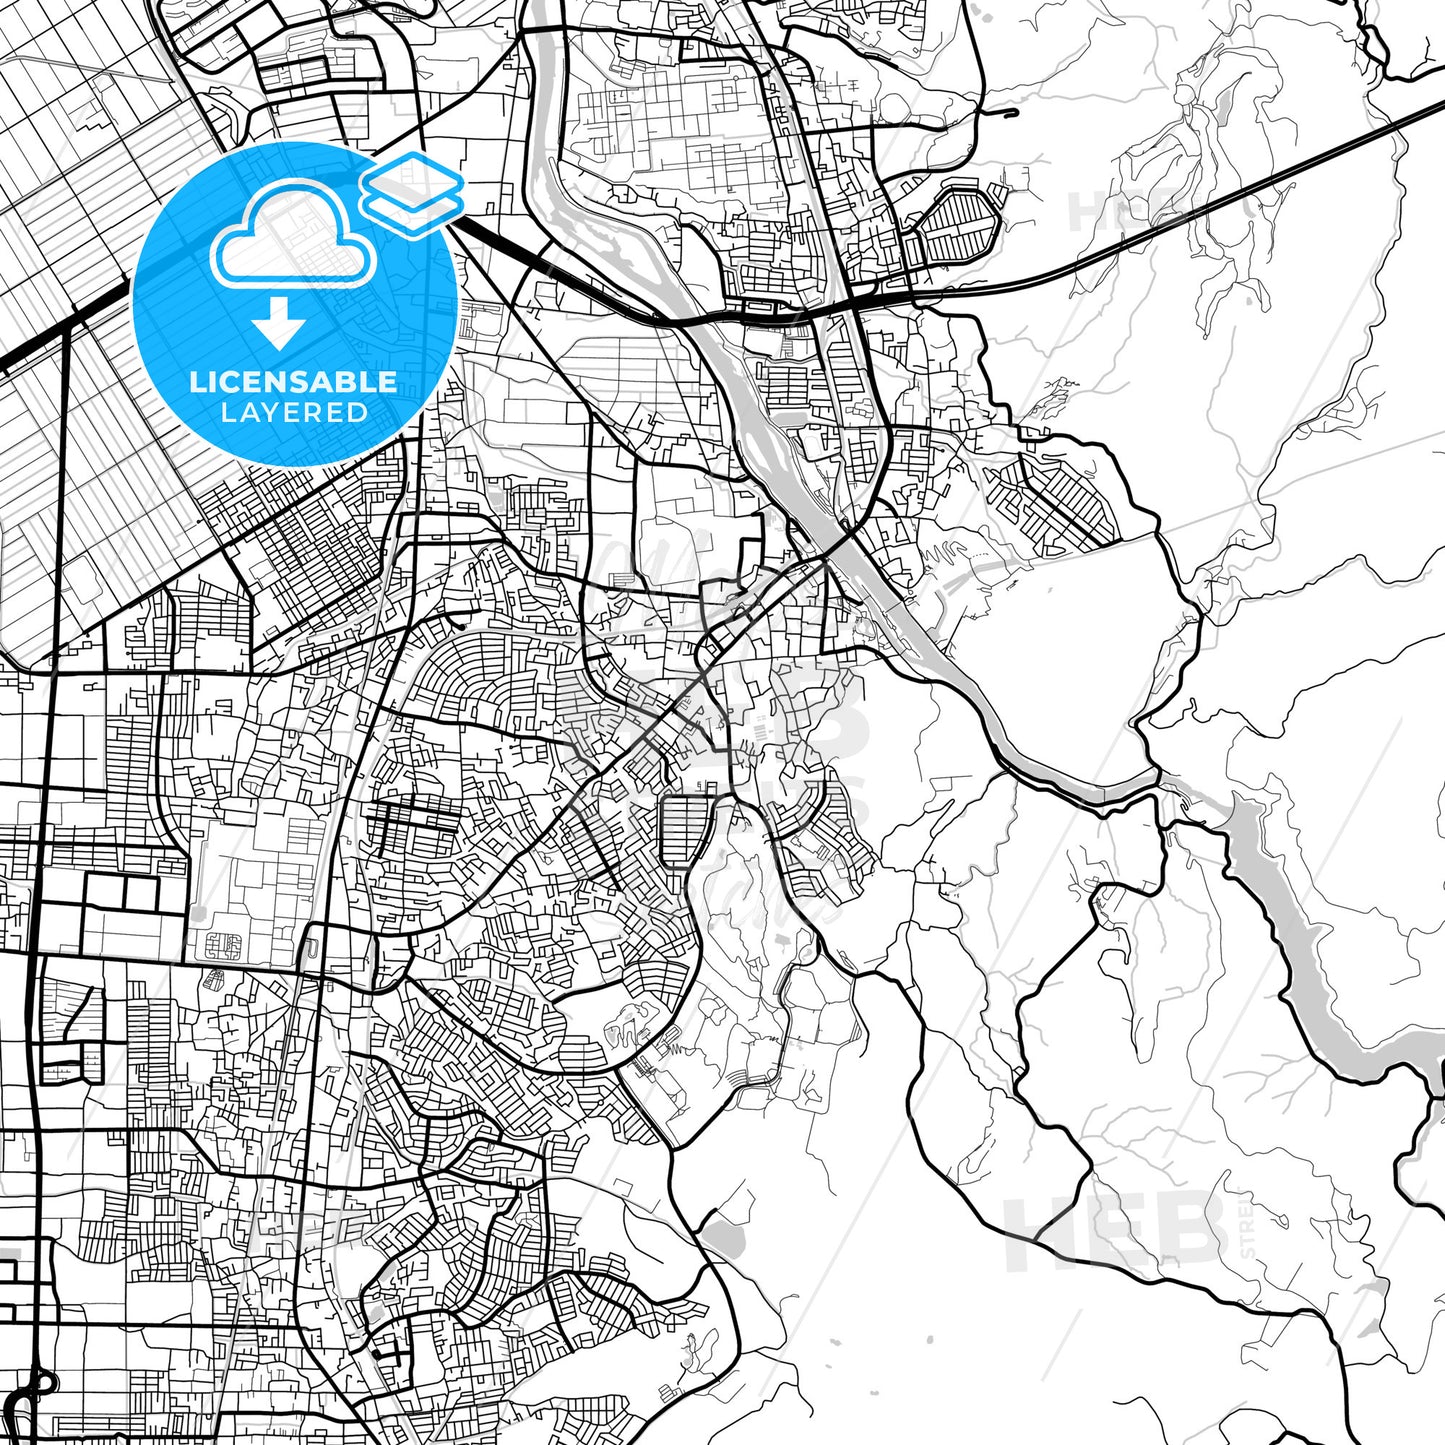 Layered PDF map of Uji, Kyoto, Japan